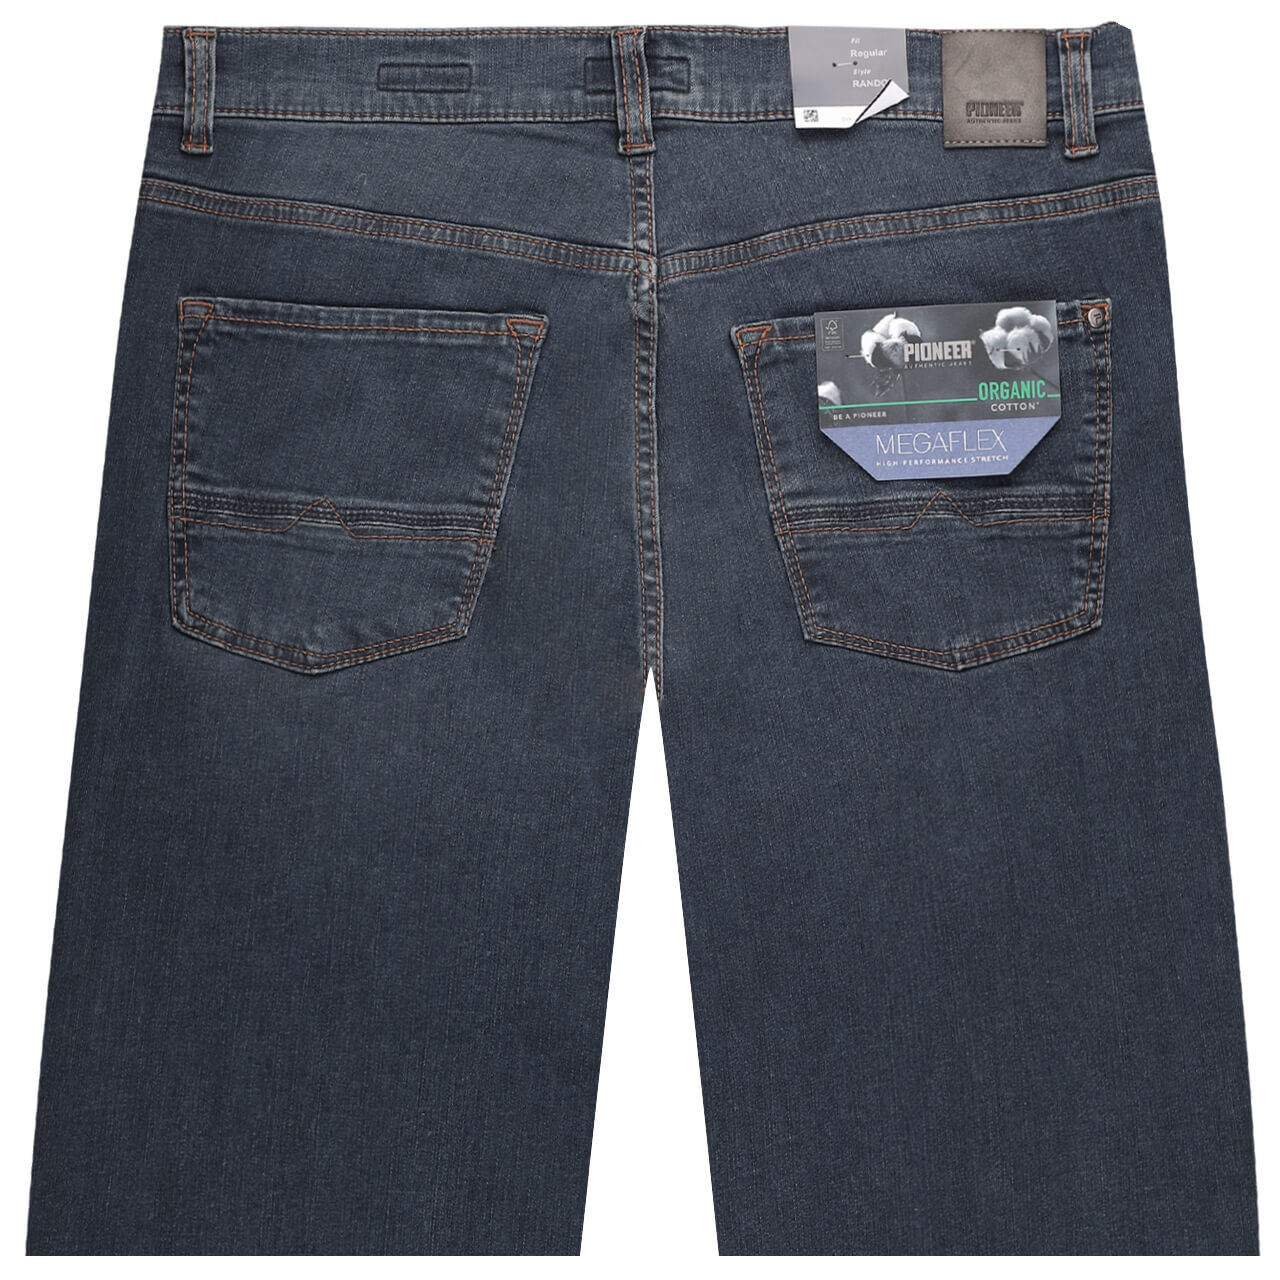 Pioneer Rando Jeans Megaflex blue black used buffies